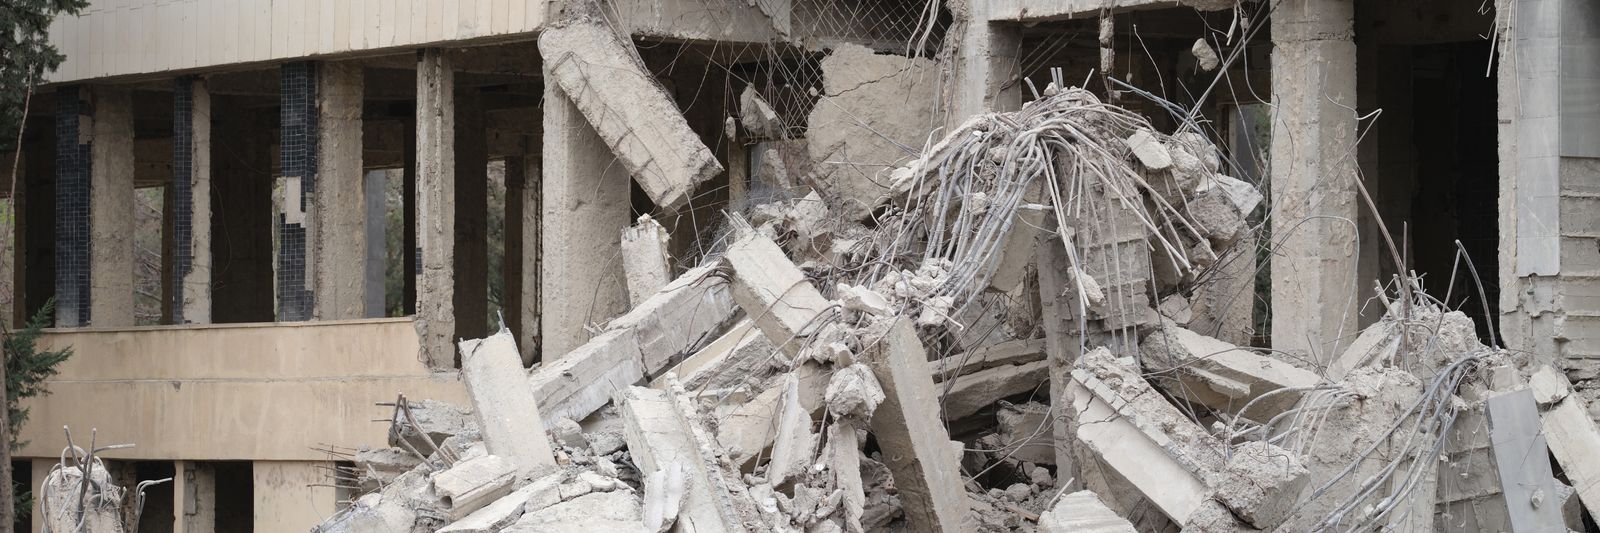 Post Earthquake image. Yayimages.